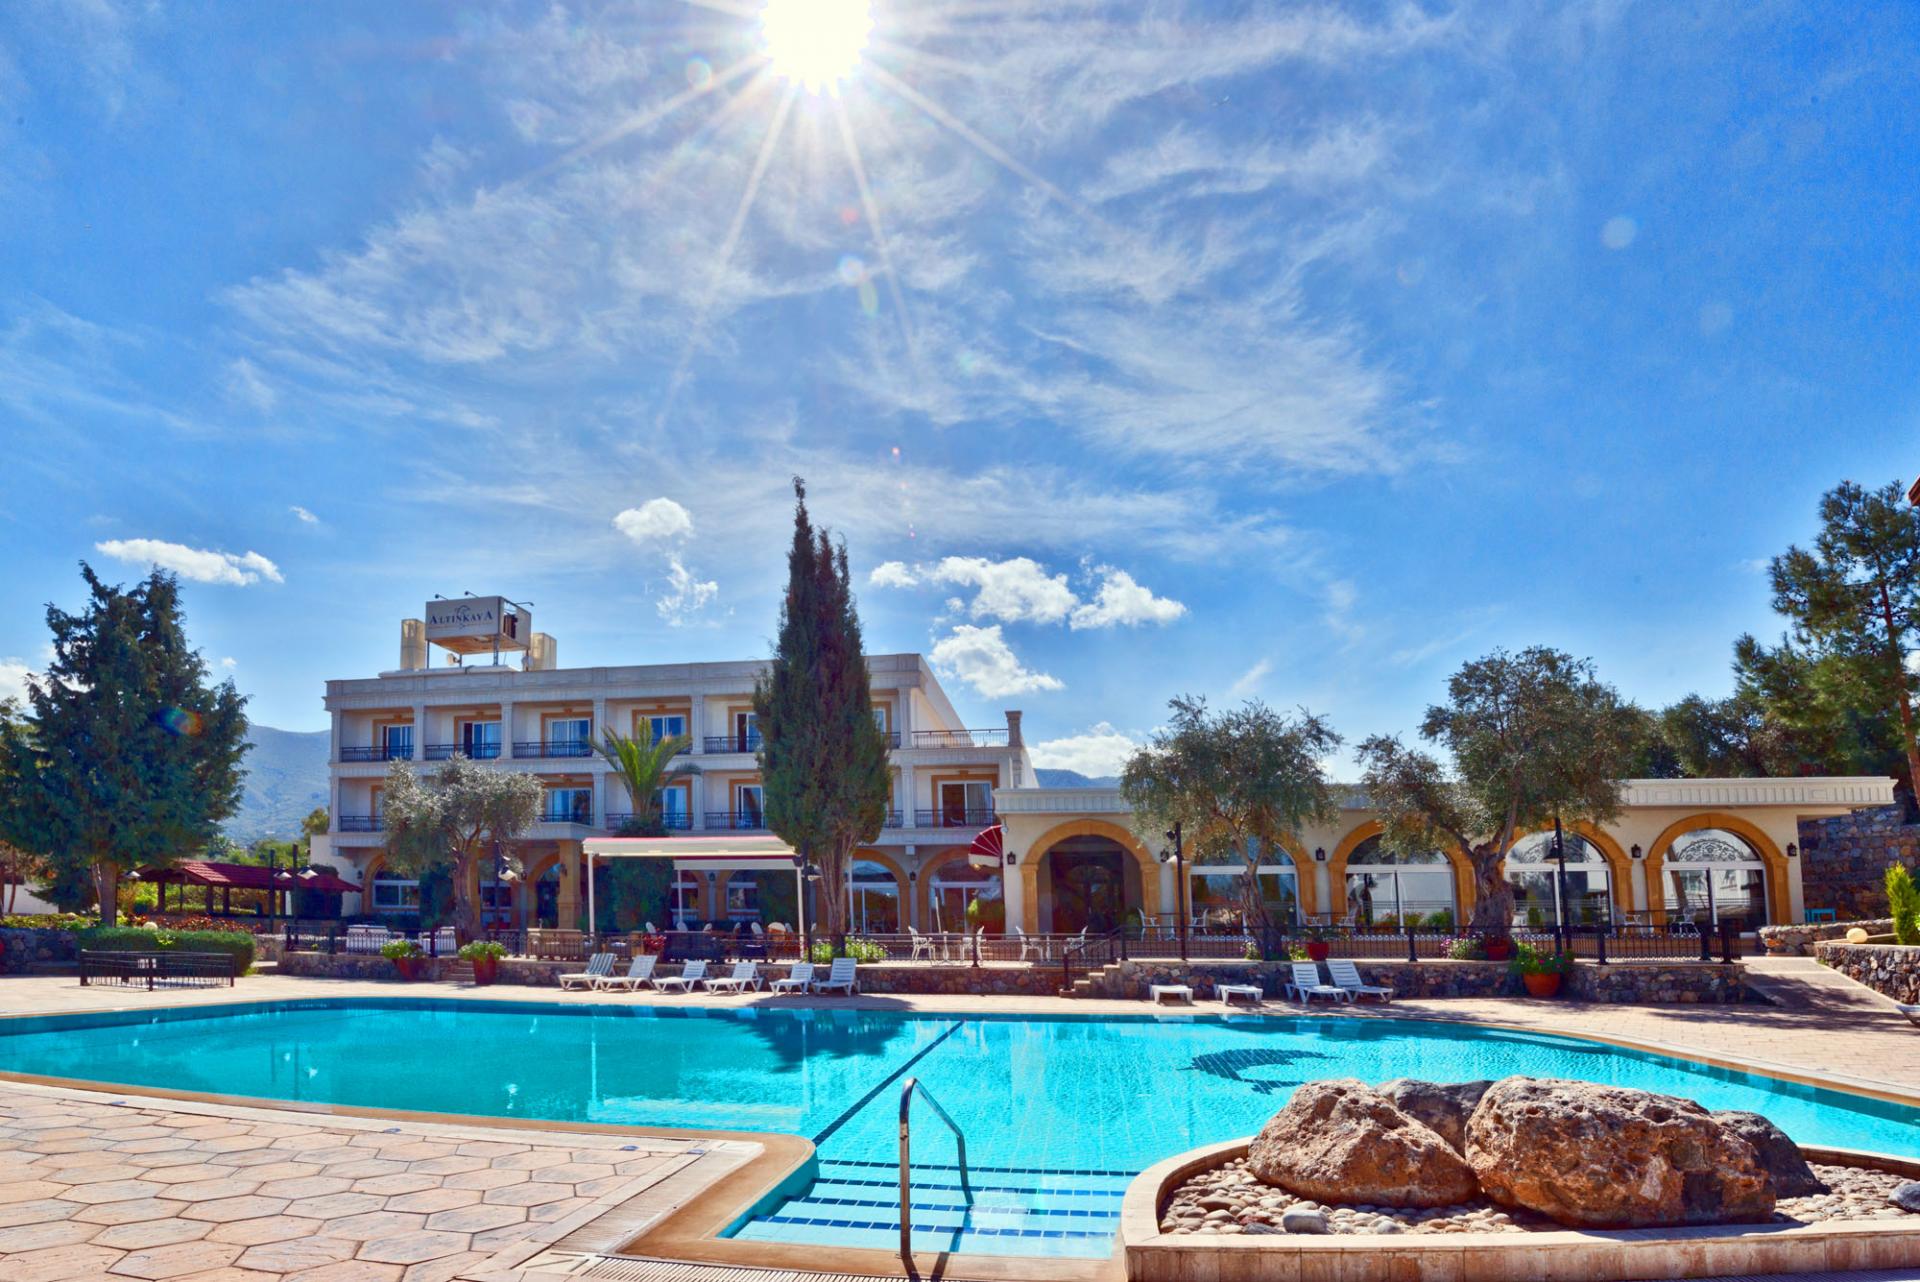 Altinkaya Holiday Resort - Cypr Północny